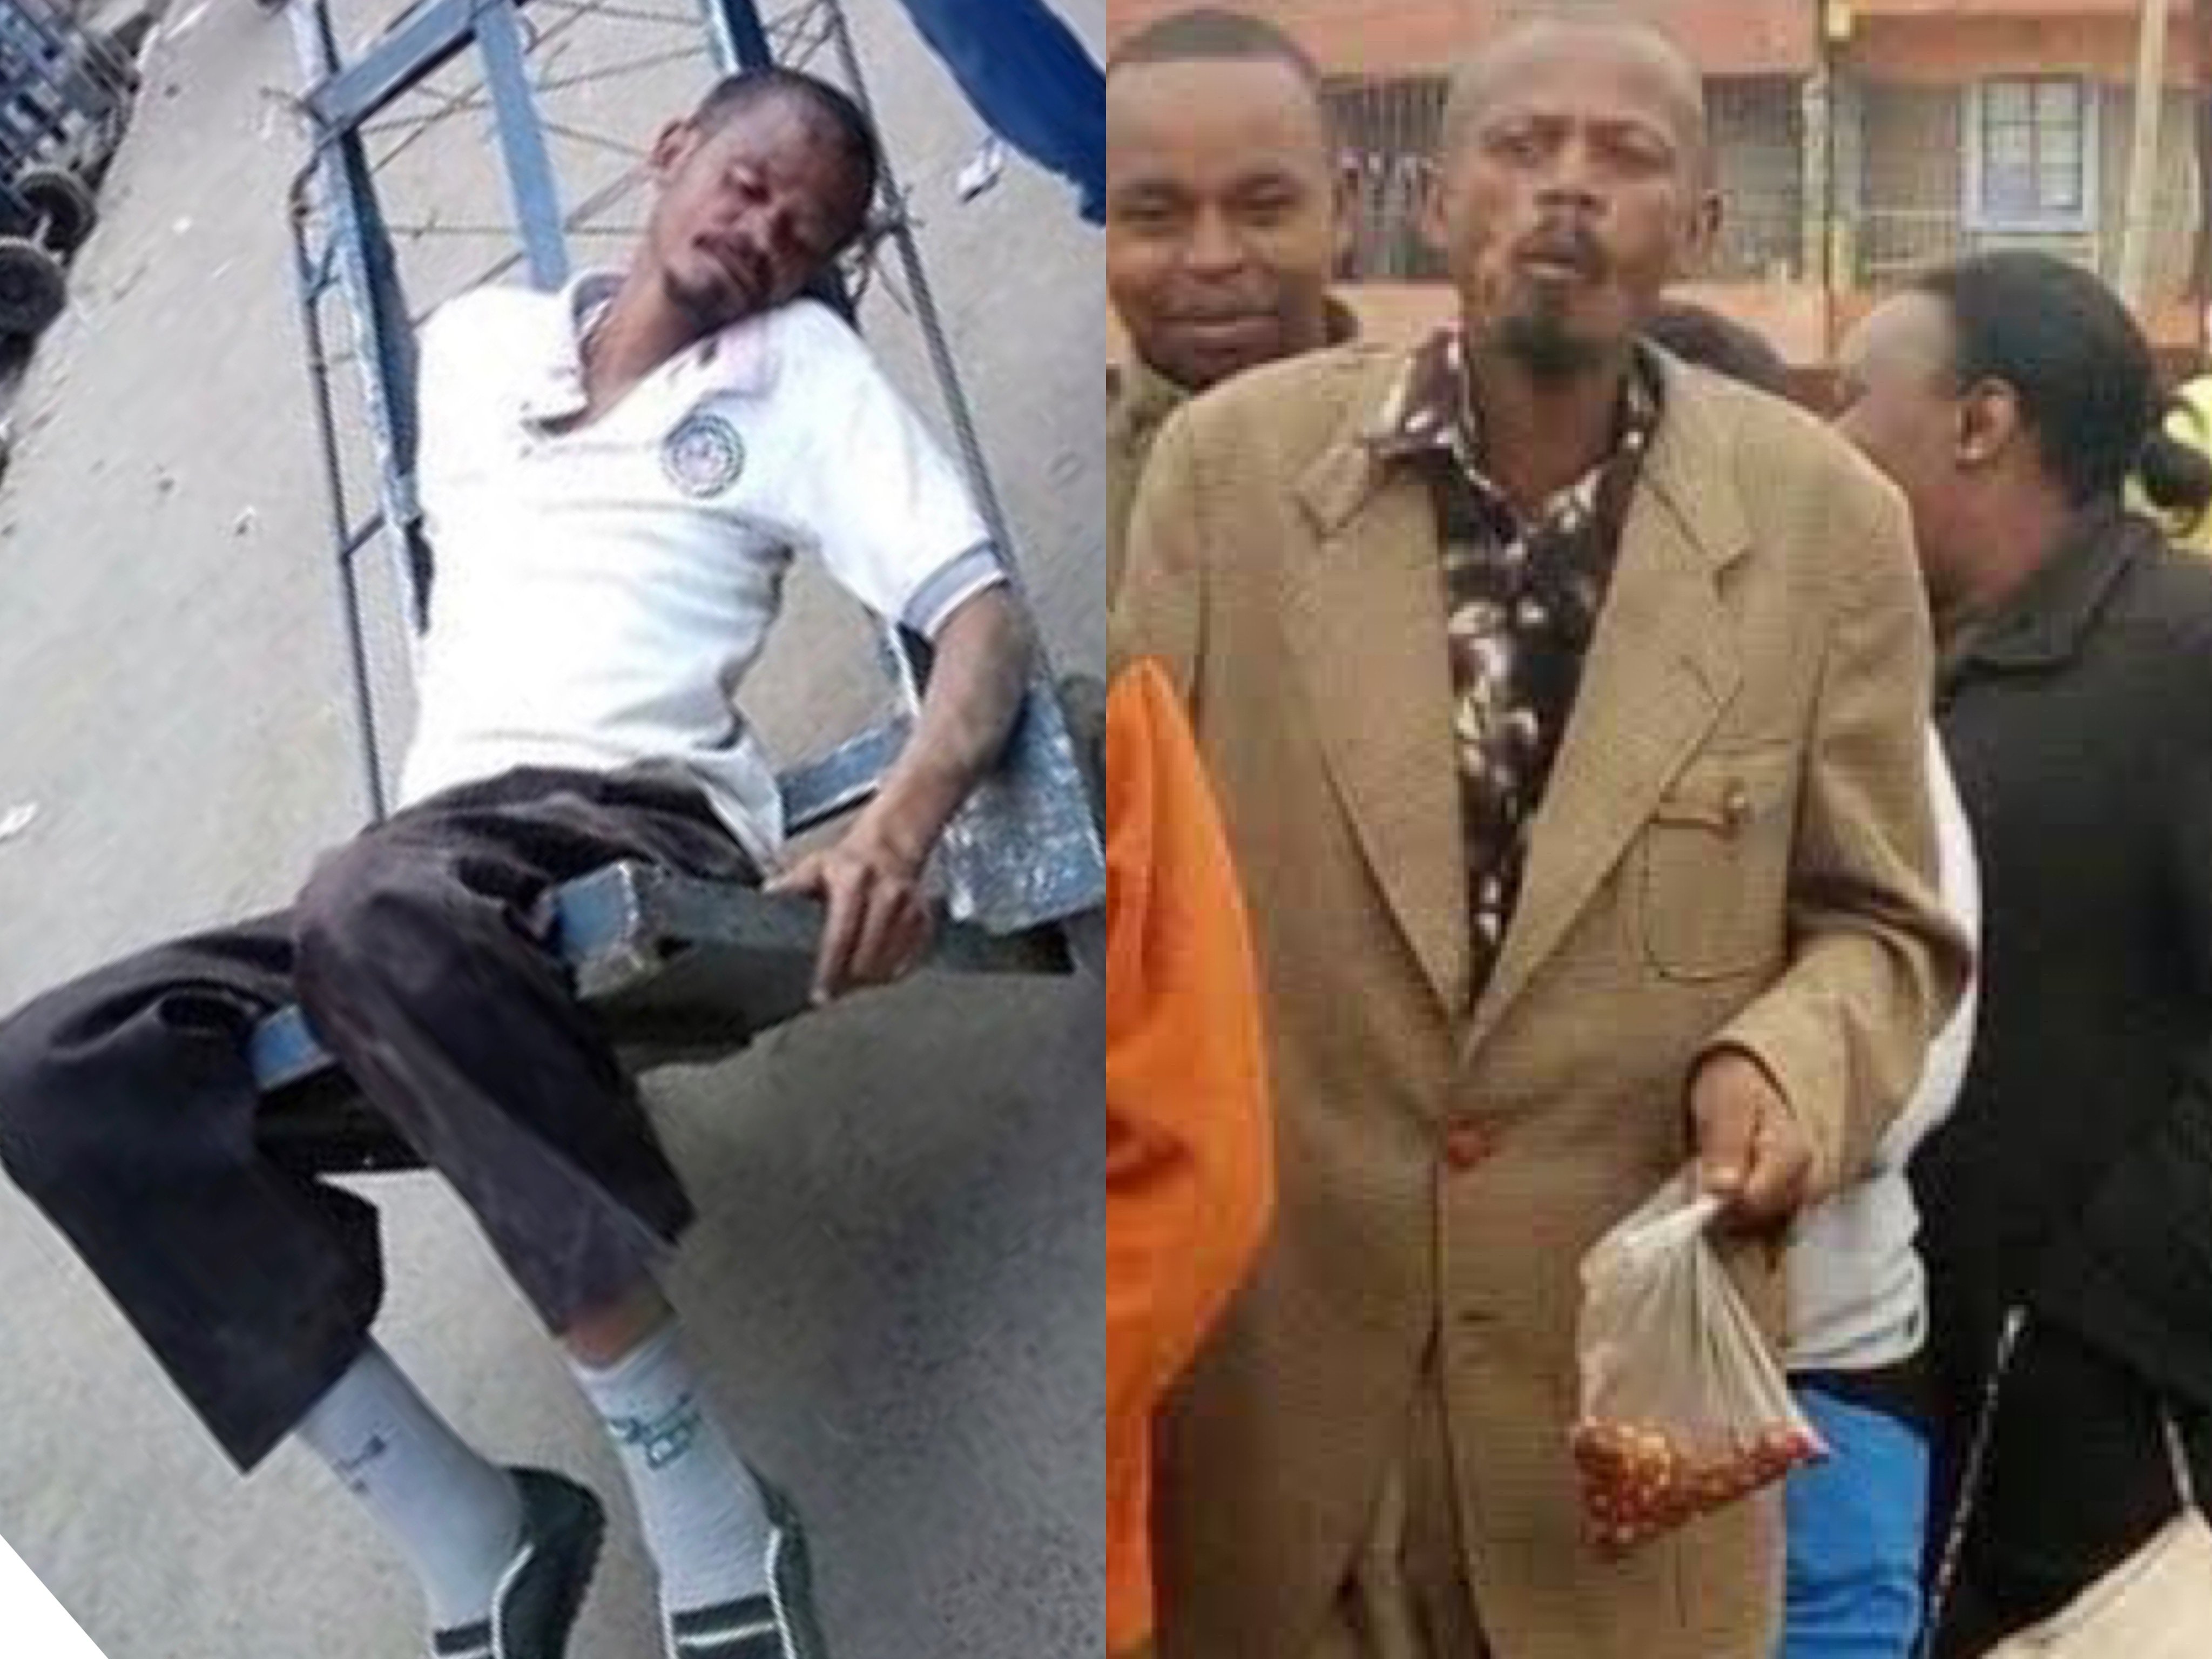 Githeri man needs urgent help or his addiction will finish him- Drug counsellor tells Kenyans